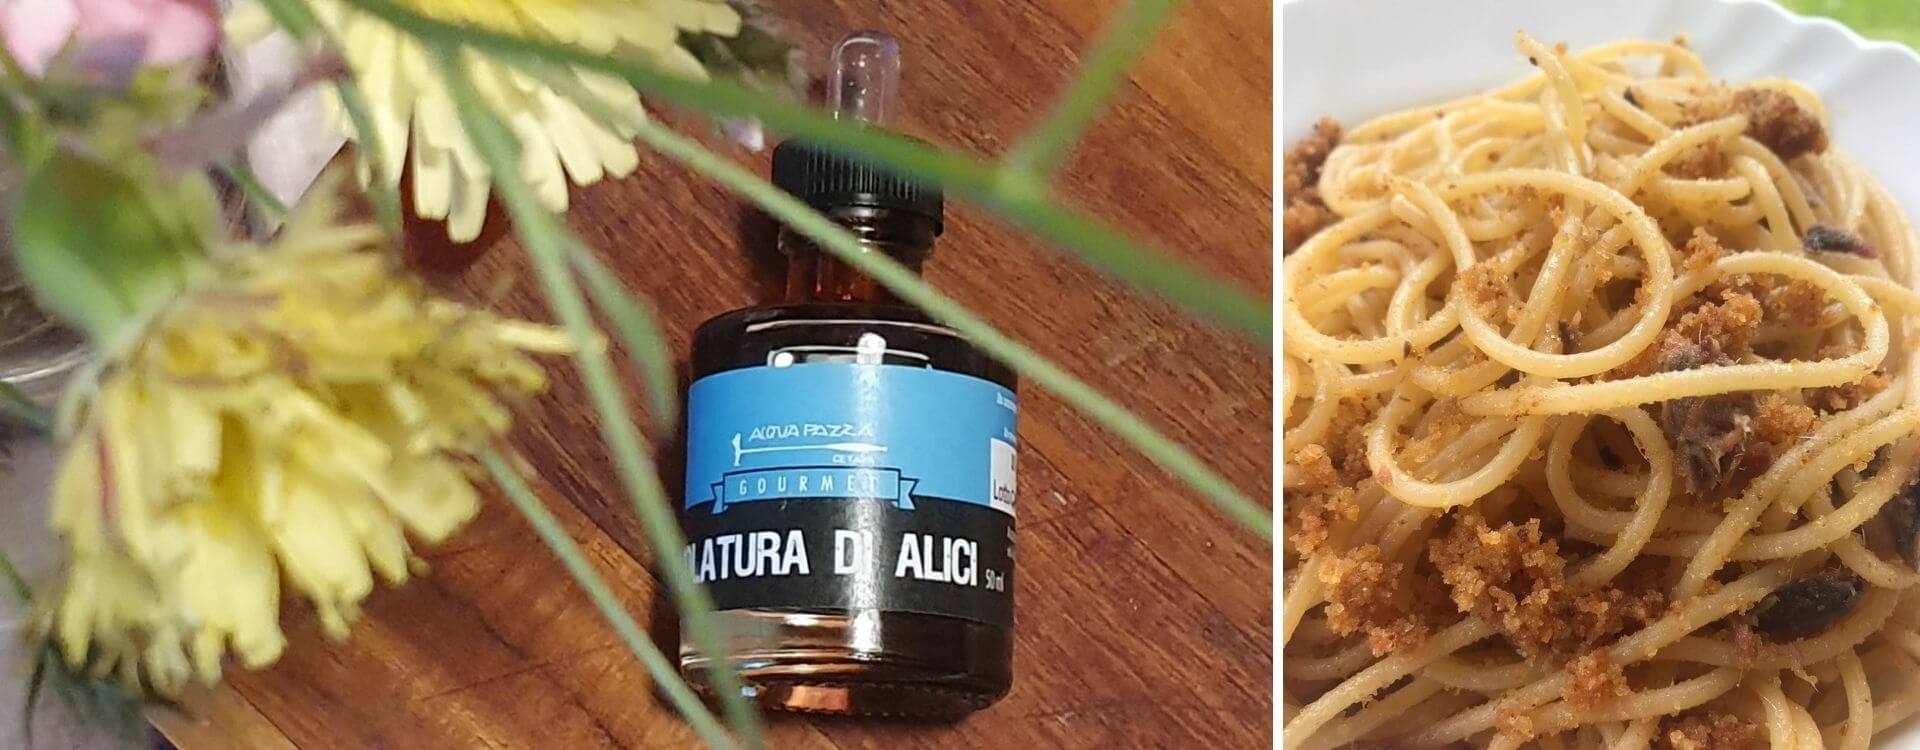 Truly special flavour enhancer: not just salt!